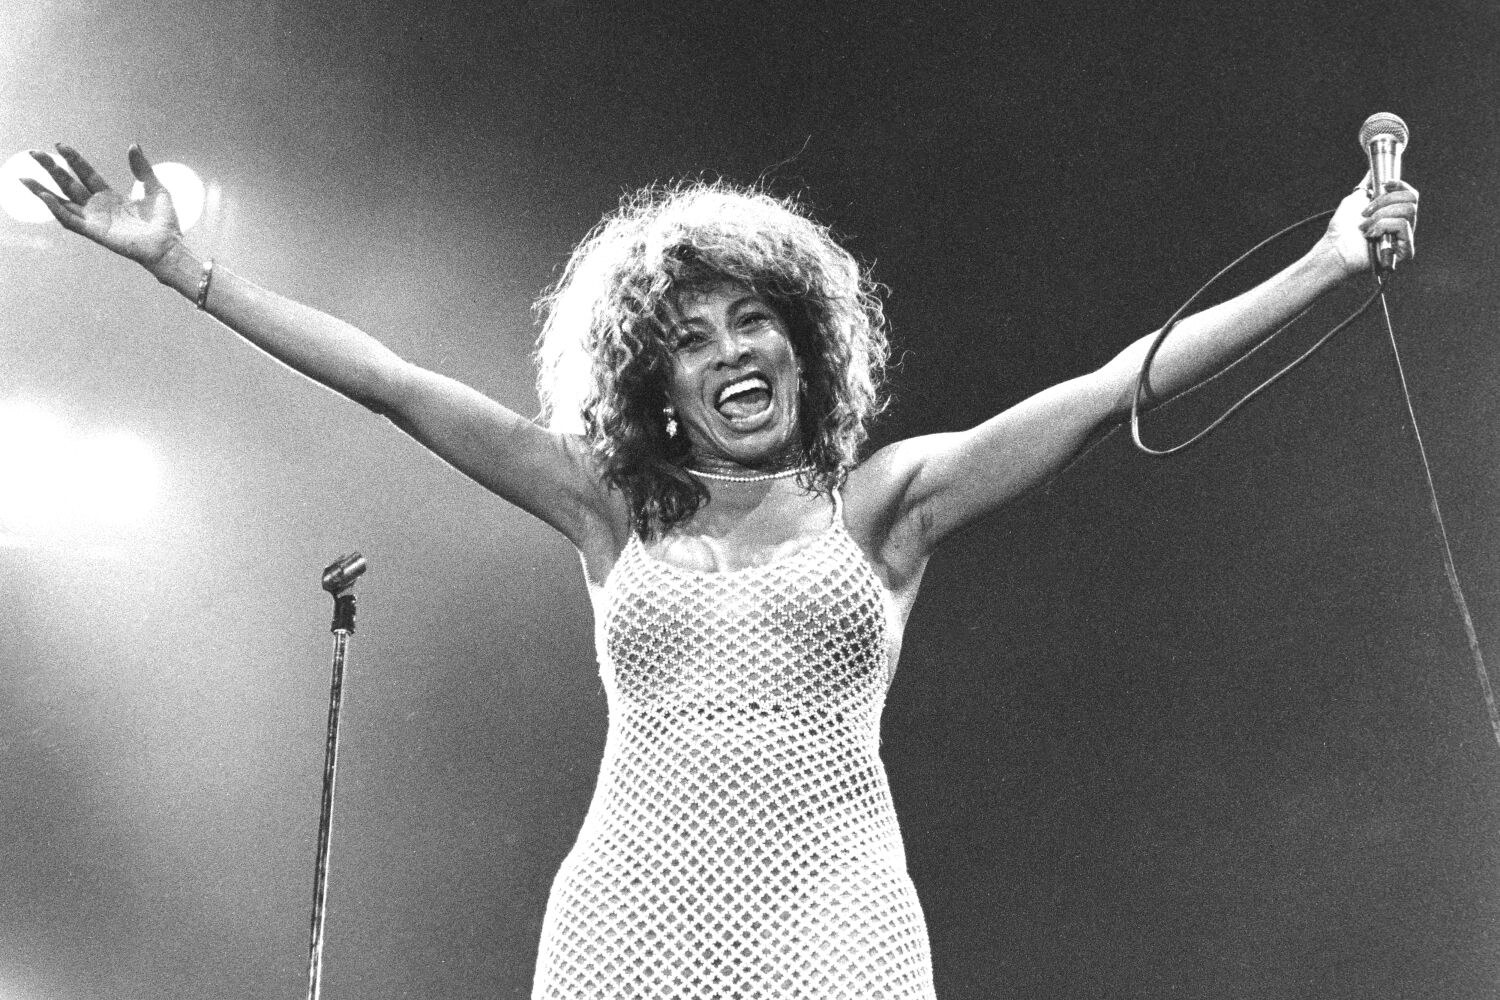 Tina Turner's life and career in photos